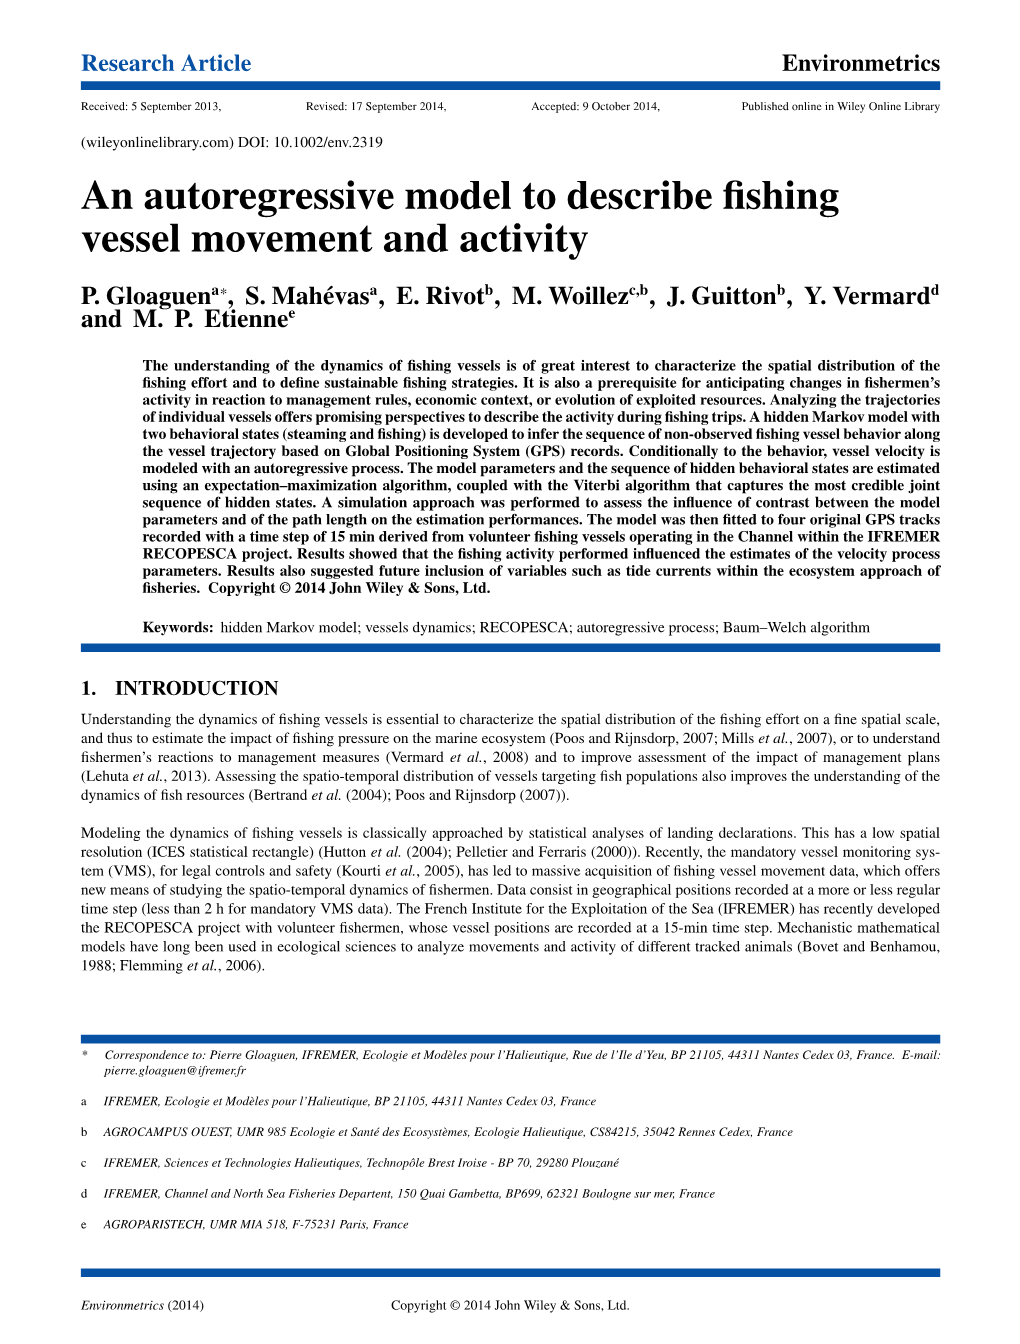 An Autoregressive Model to Describe Fishing Vessel Movement and Activity